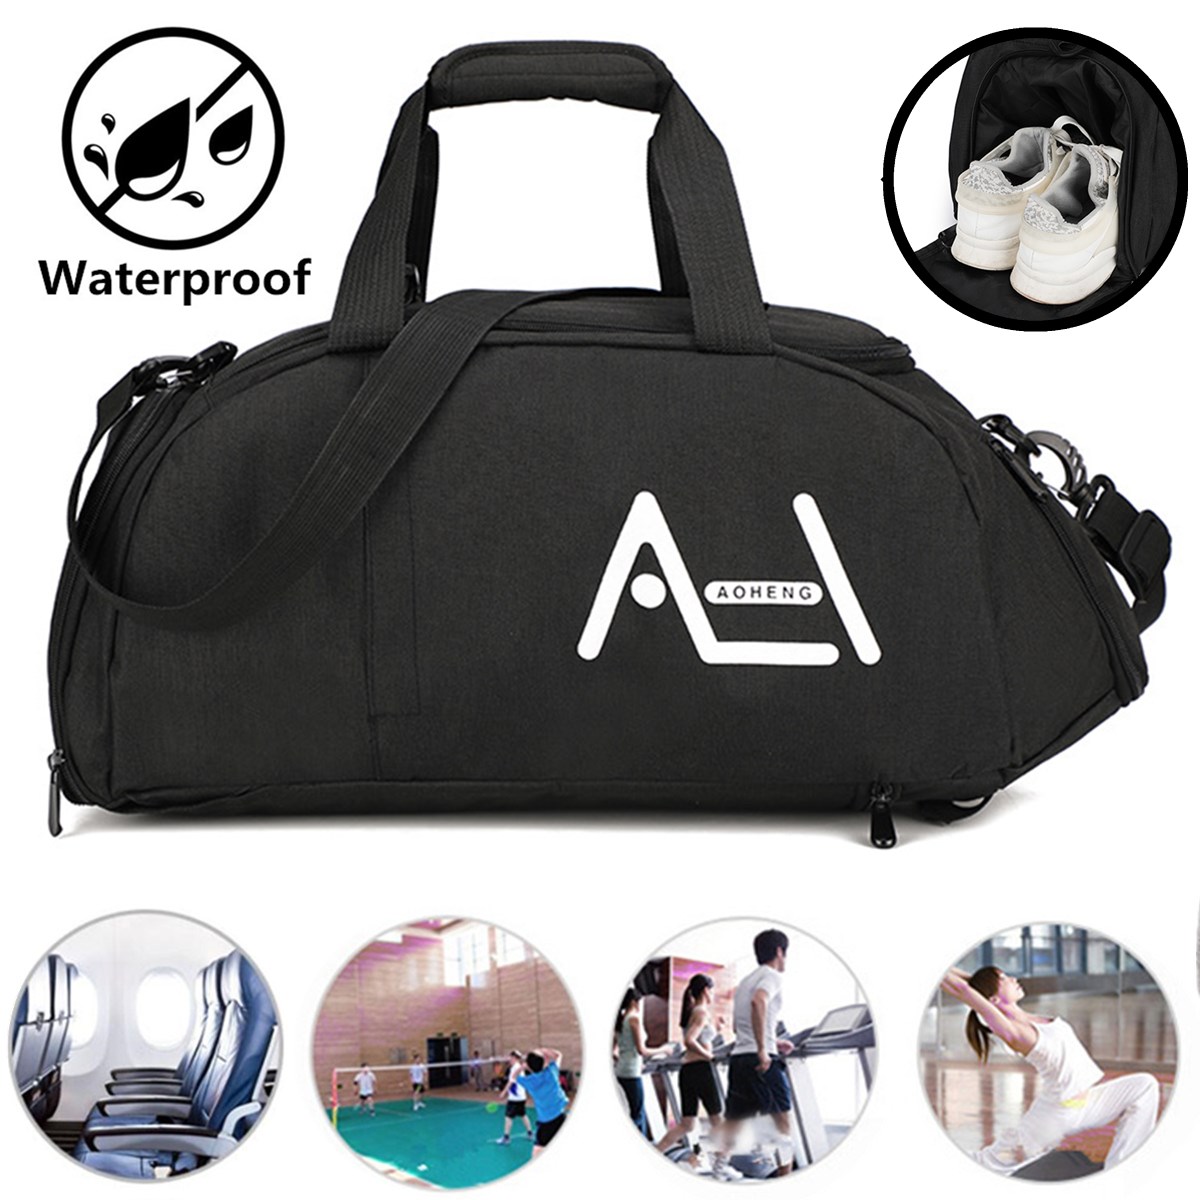 AoluHeng-Multifunctional-Waterproof-Sports-Fitness-Yoga-Backpack-Outdoor-Travel-Gym-Shoulder-Bag-Sho-1603840-1